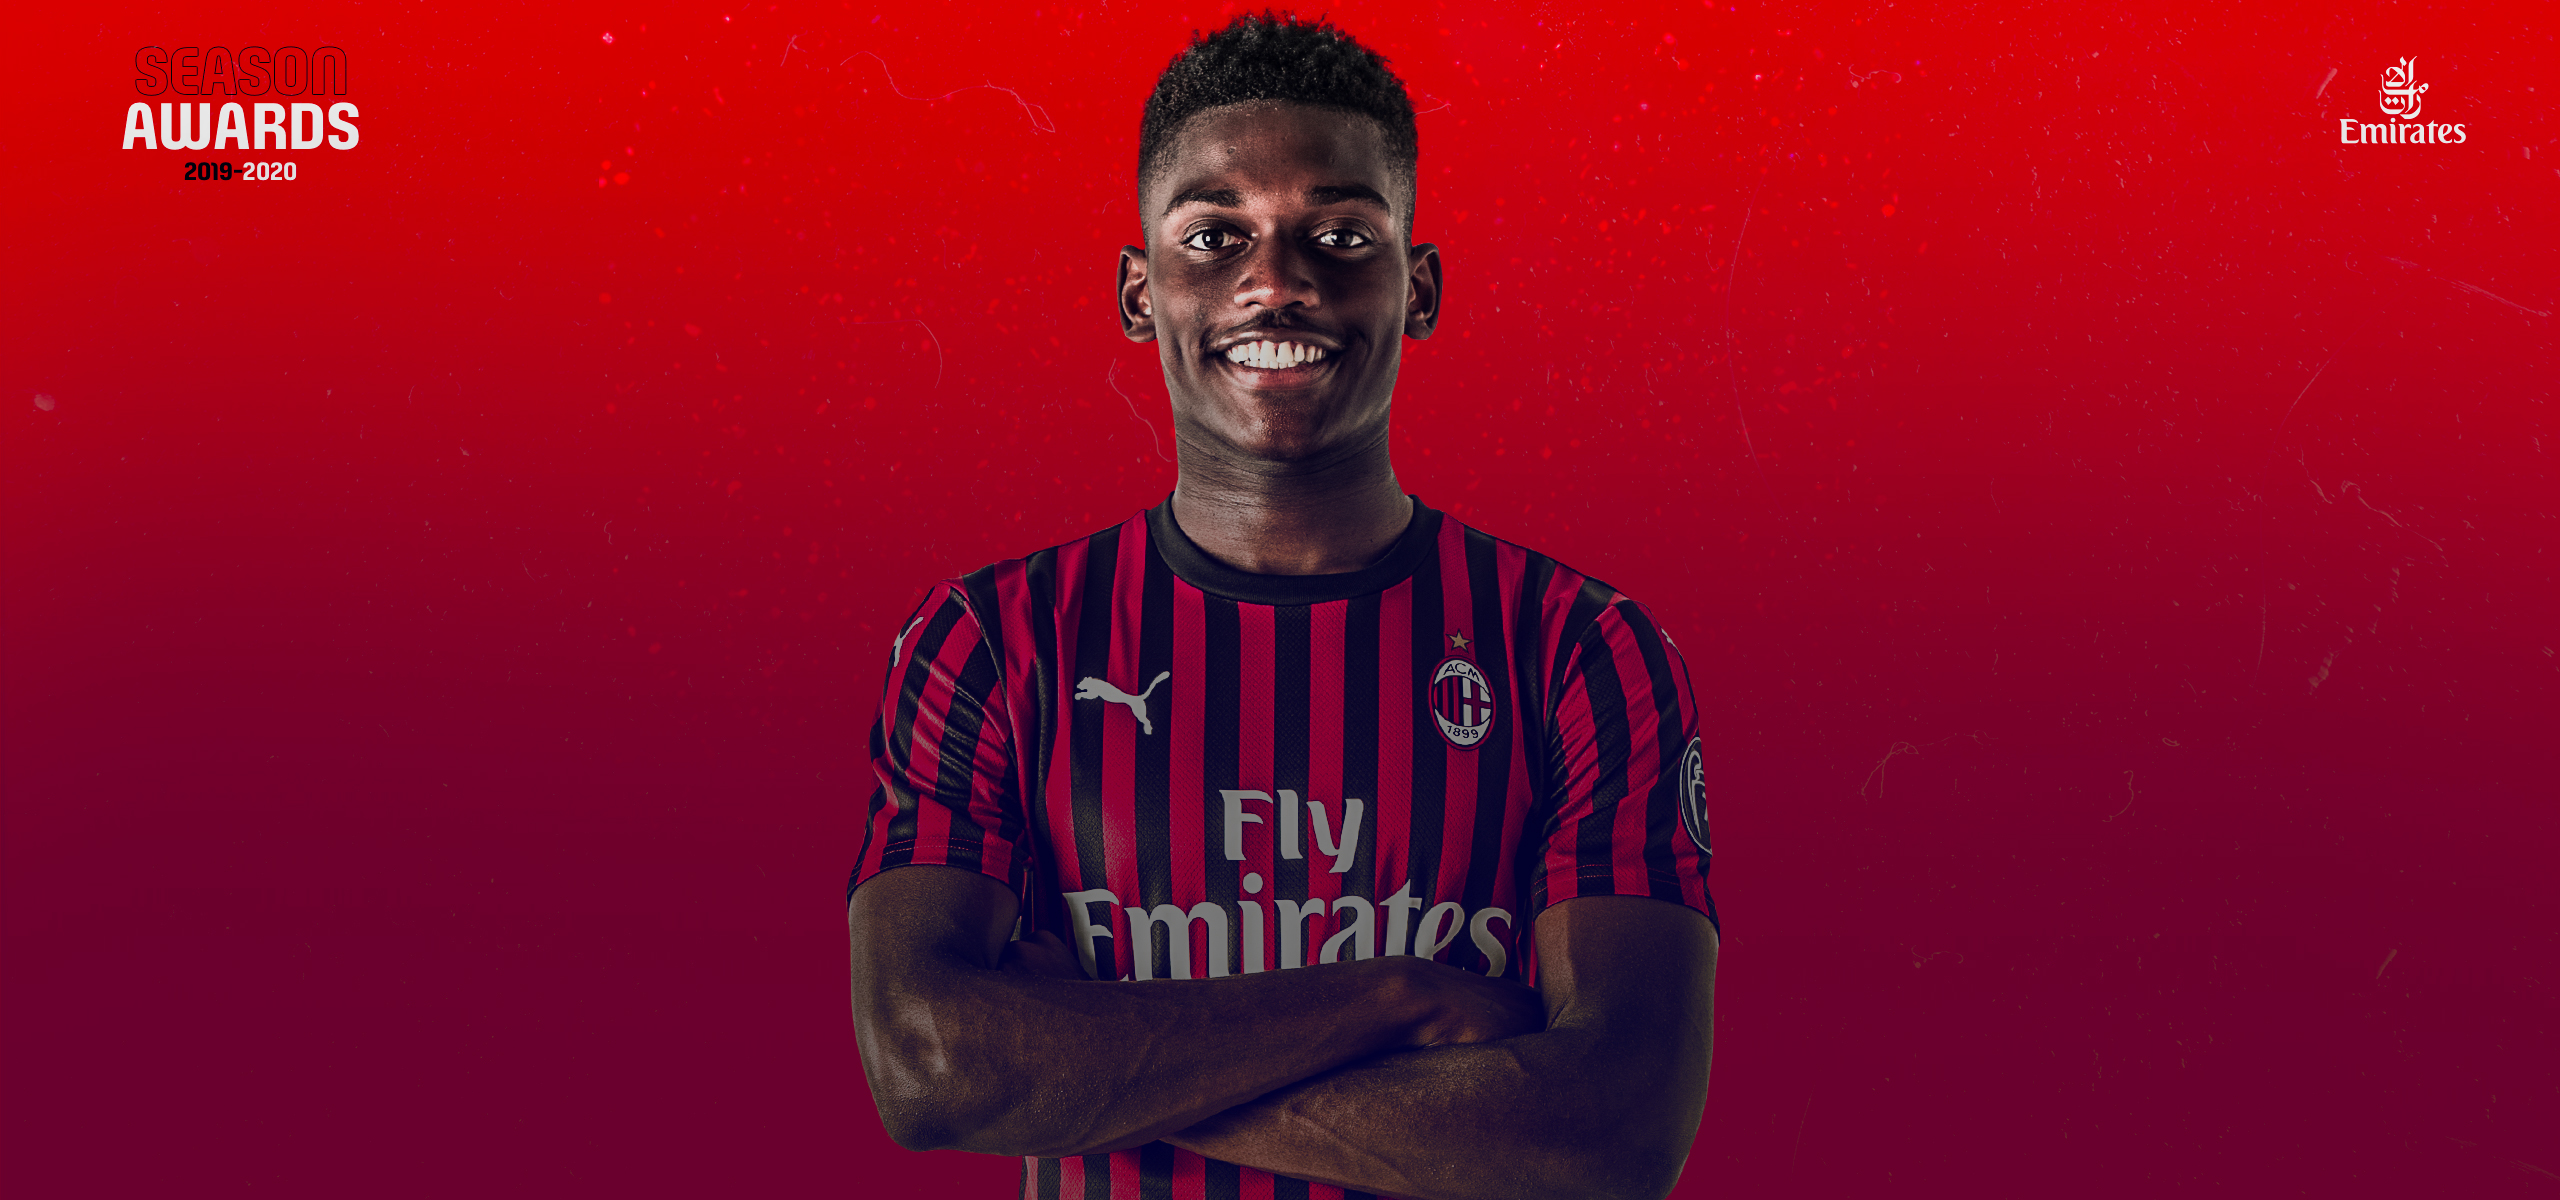 Leão goal of season 2019/20! | AC Milan